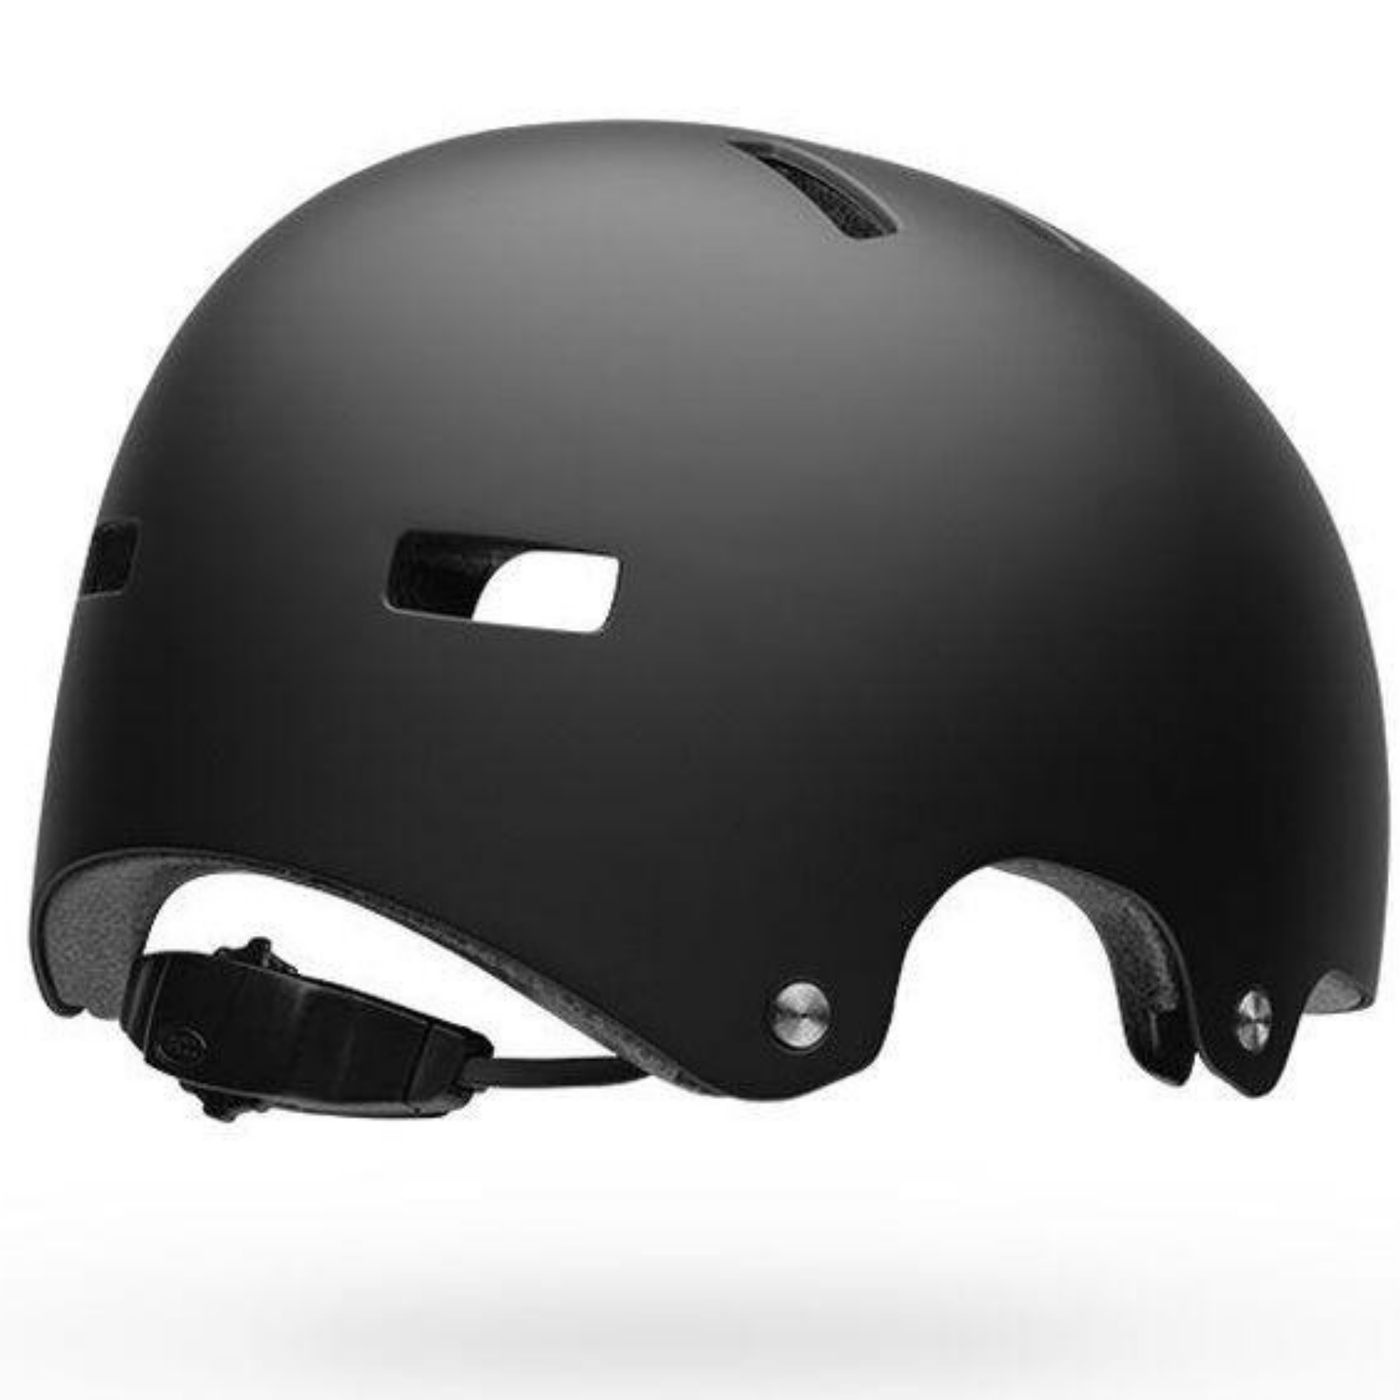 Bell Helmet Local - Matte Black 8Lines Shop - Fast Shipping